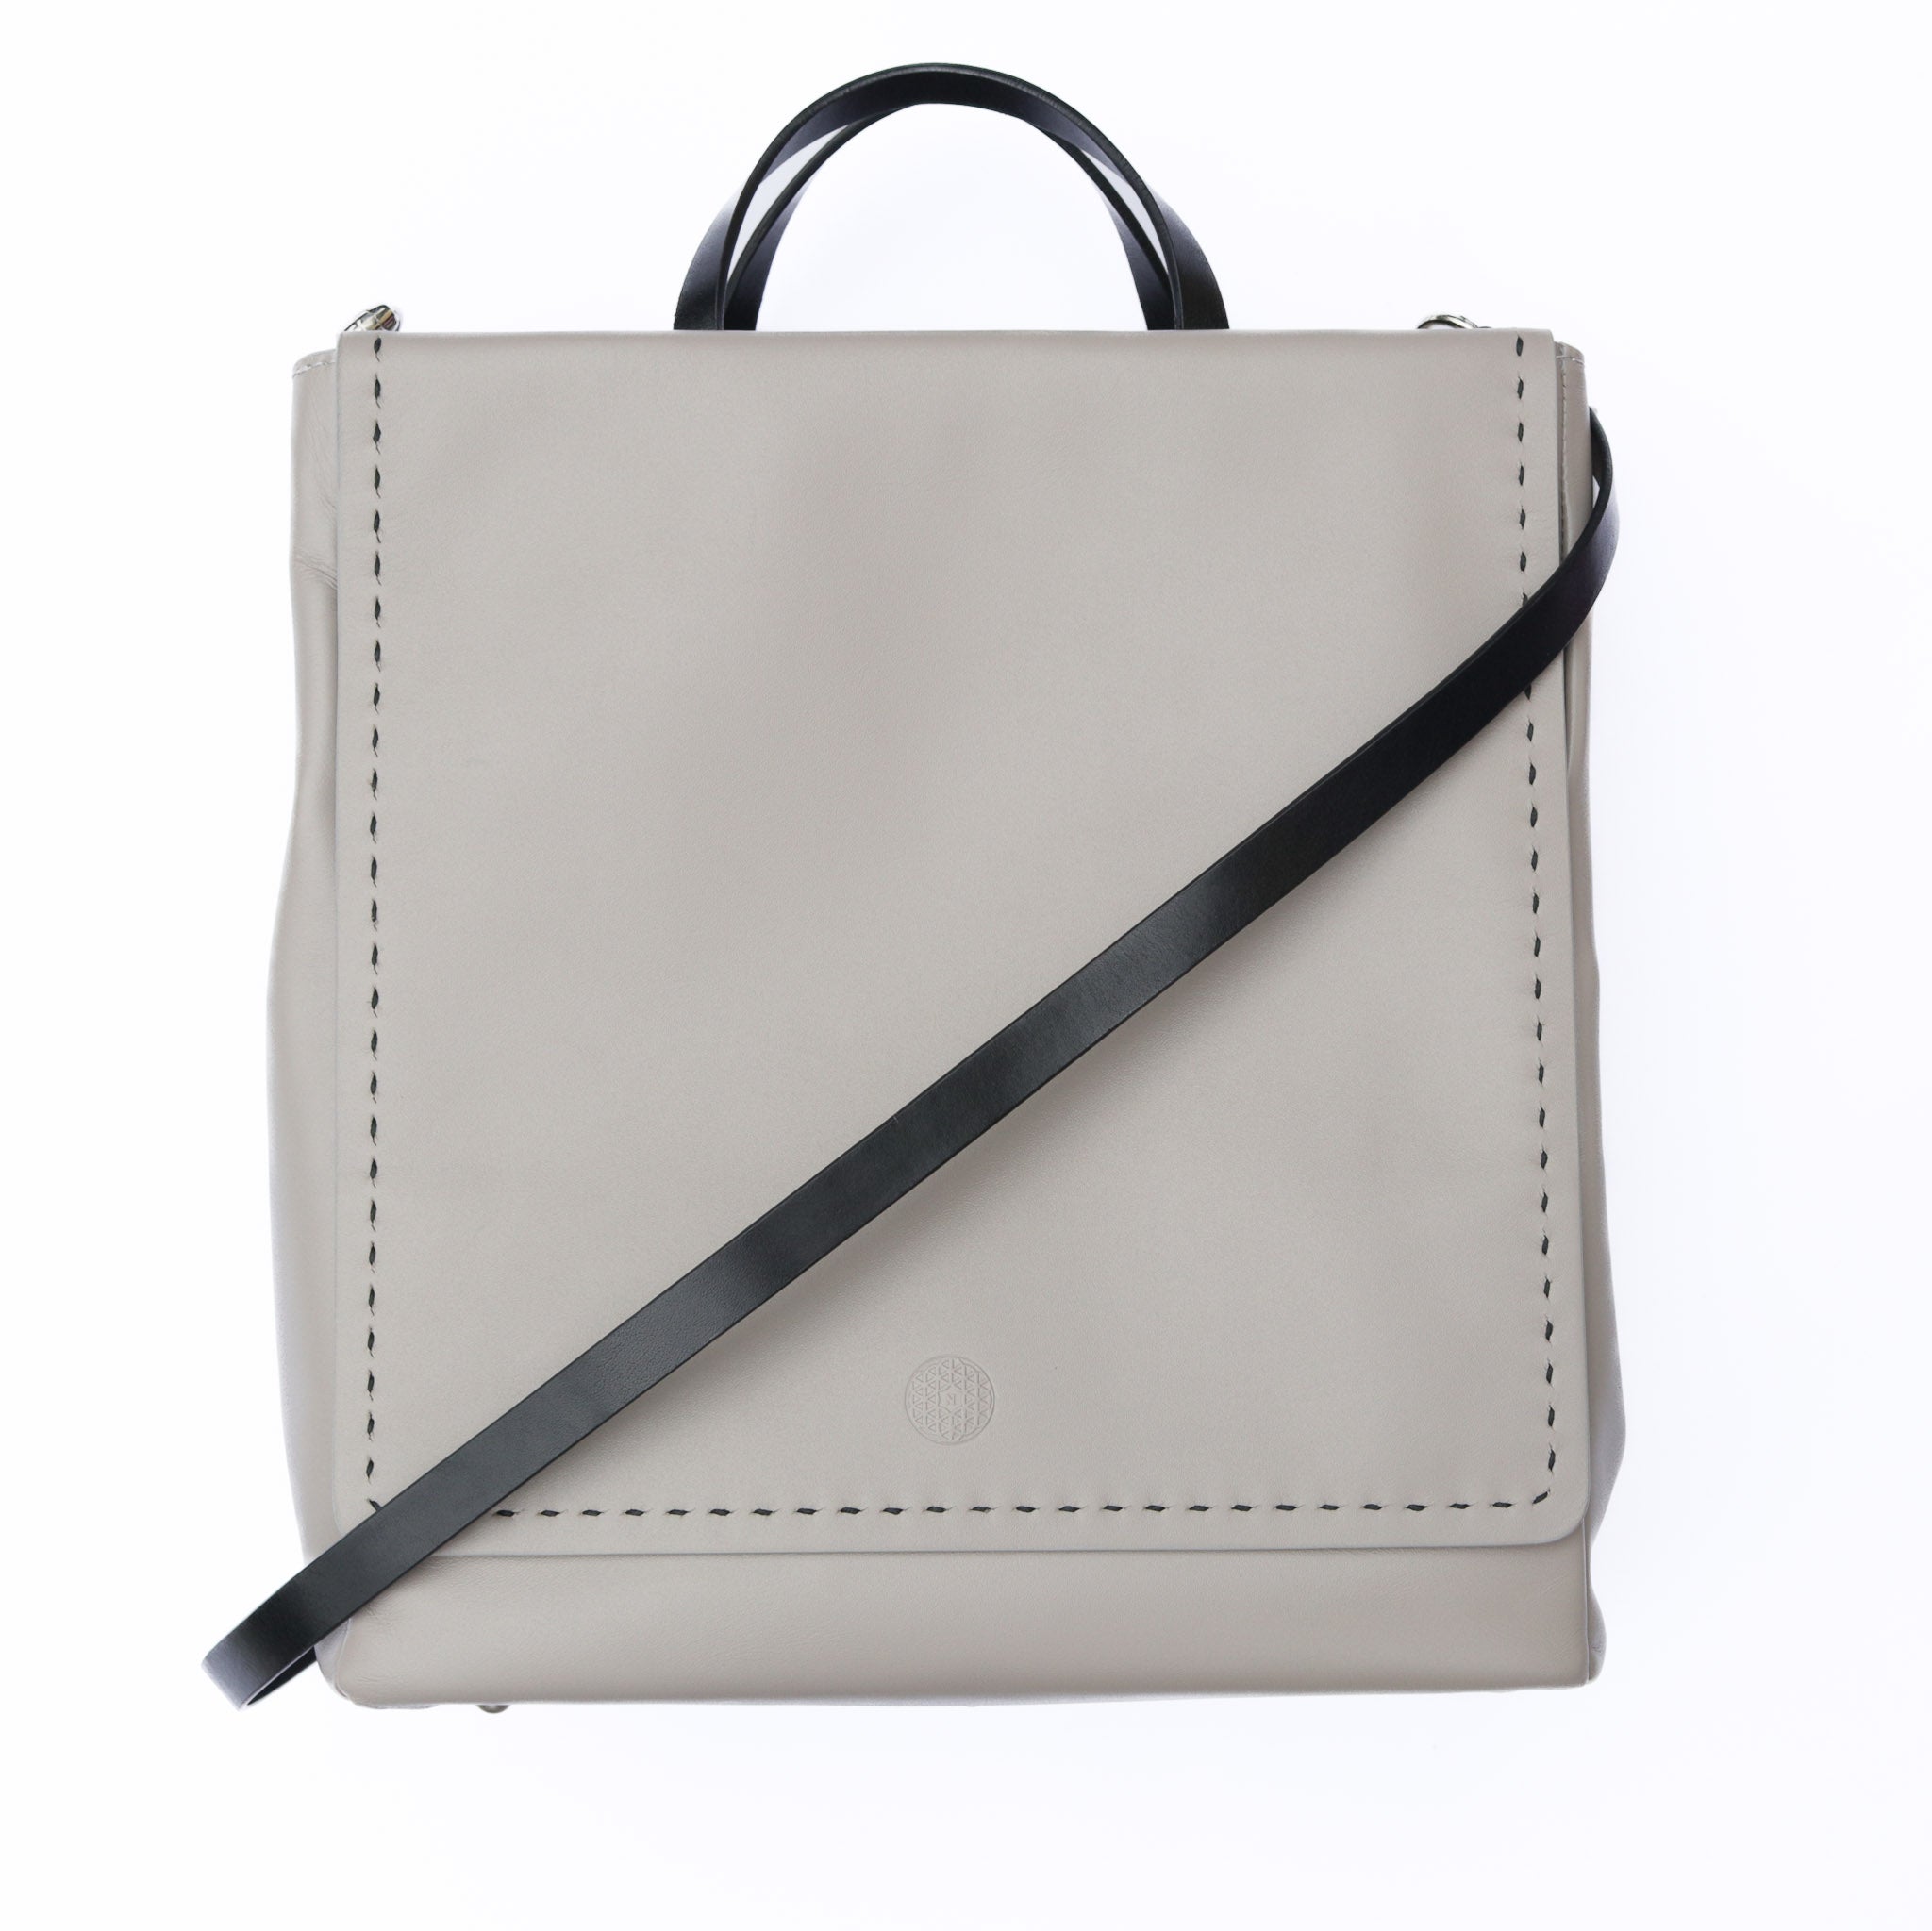 business bag in light colour